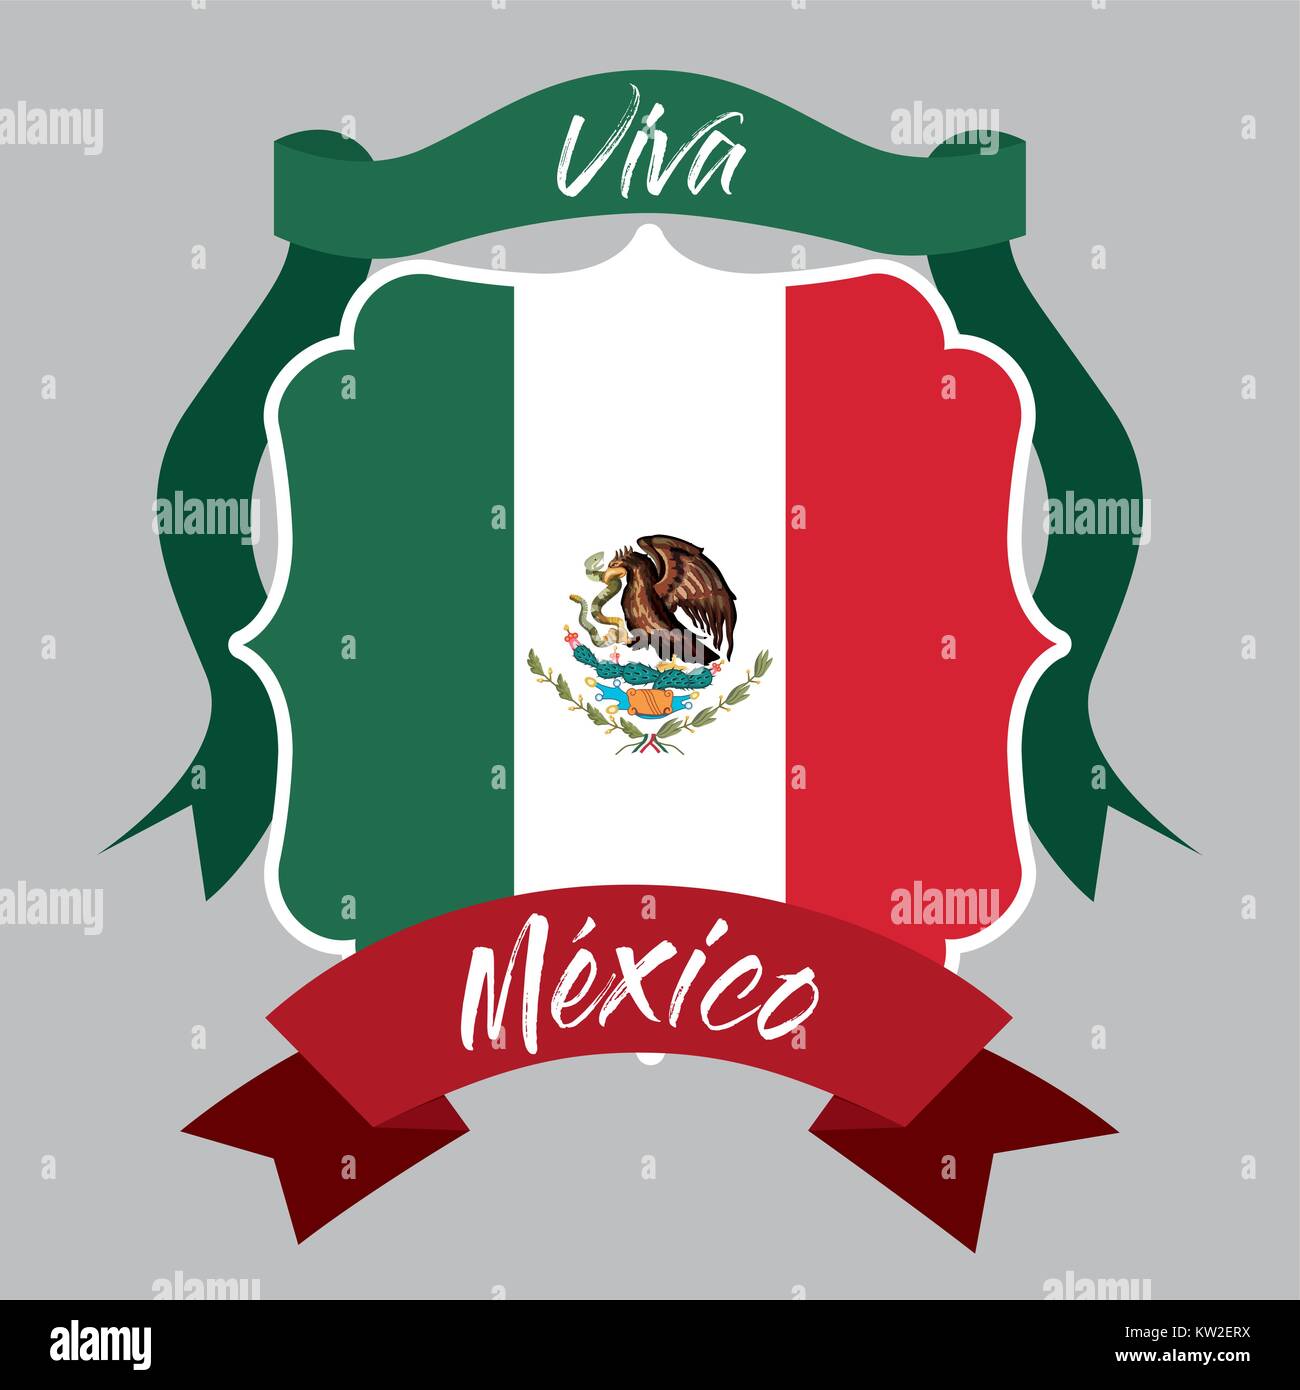 viva mexico insignia flag with decorative ribbon in colorful silhouette Stock Vector